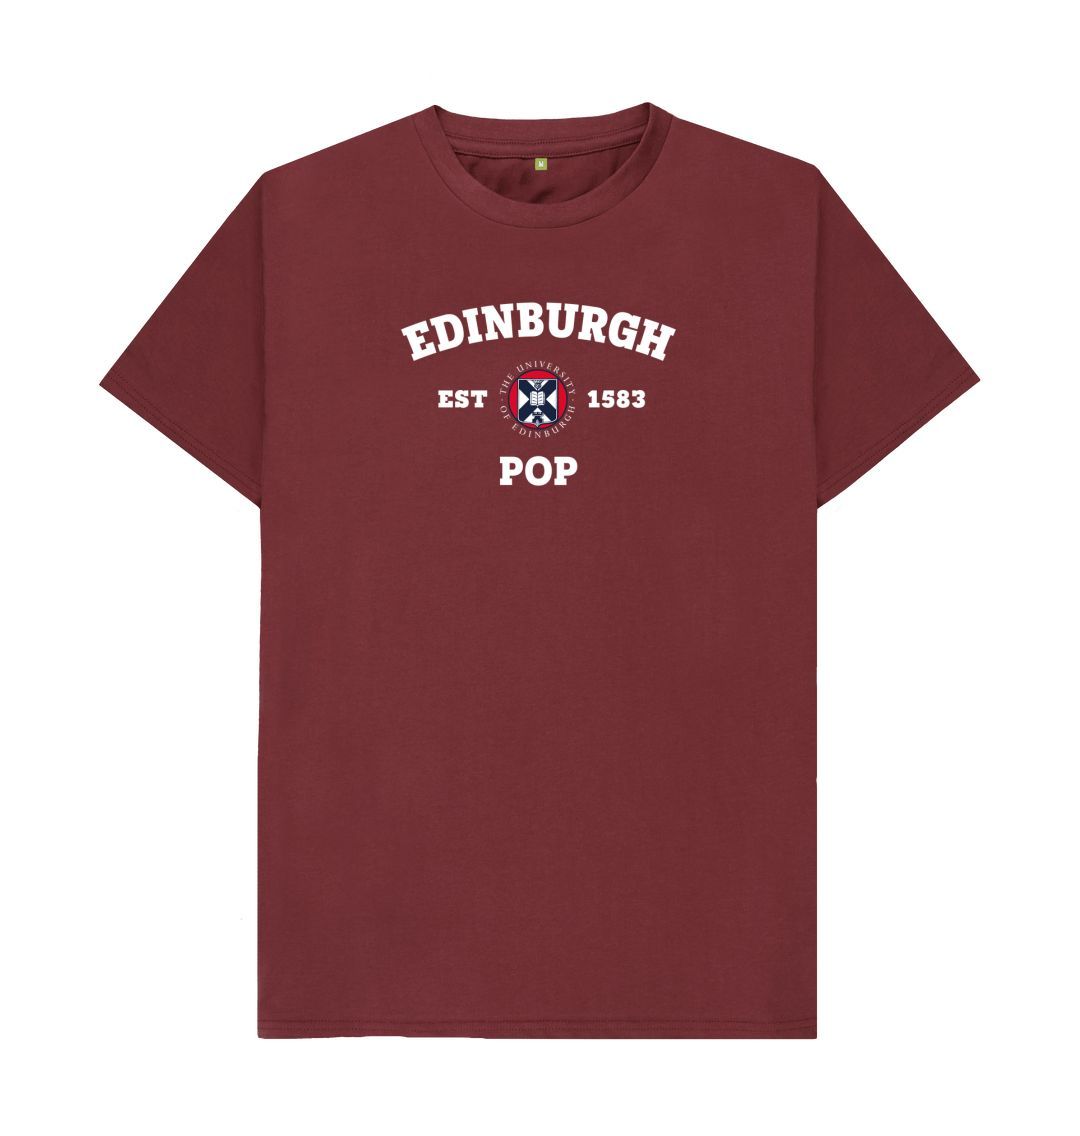 Red Wine Edinburgh Pop T-Shirt